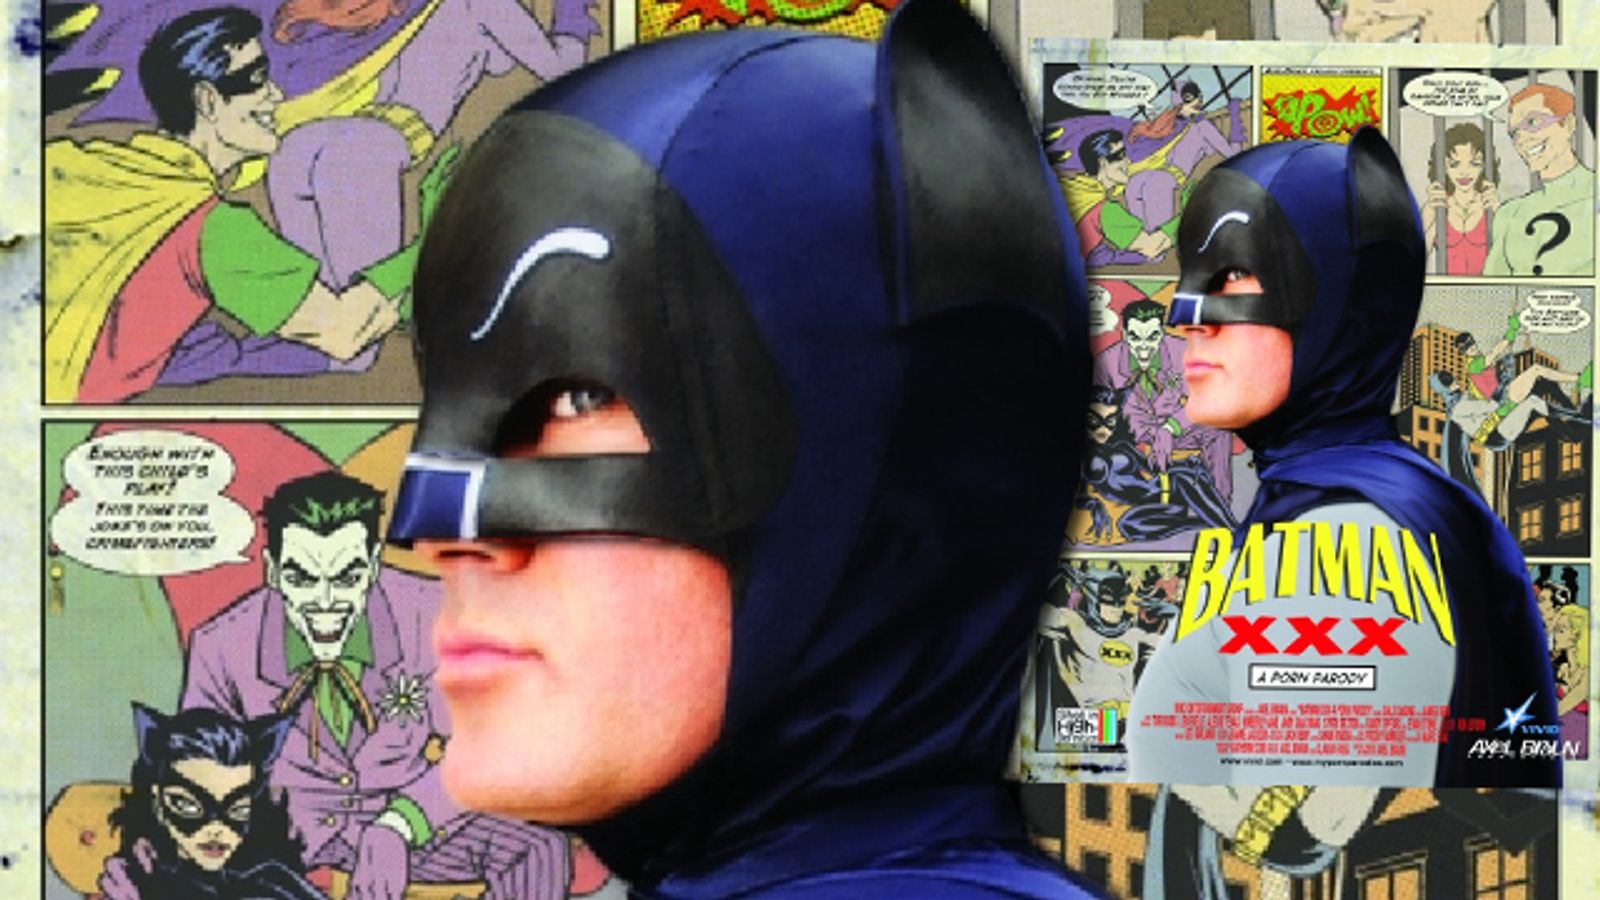 Vivid to Provide Live Streaming BTS Video for Batman XXX | AVN